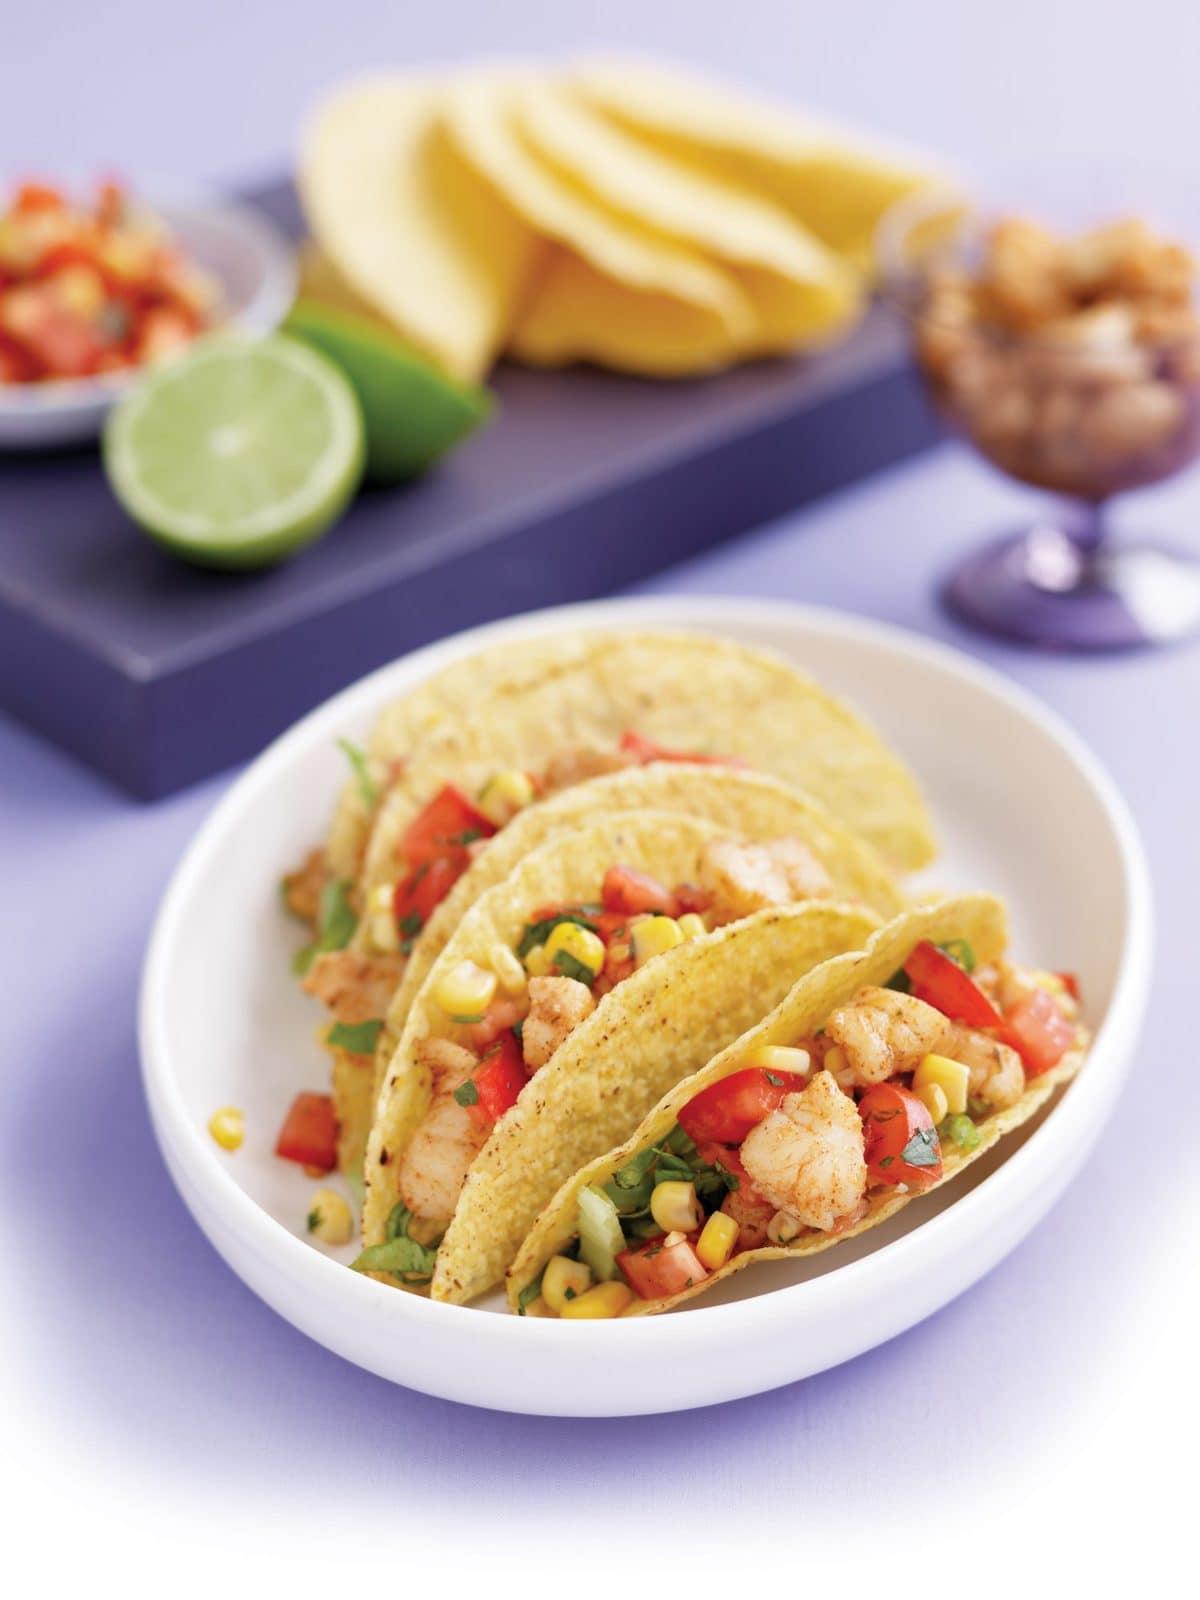 Cajun fish tacos with corn salsa - Healthy Food Guide